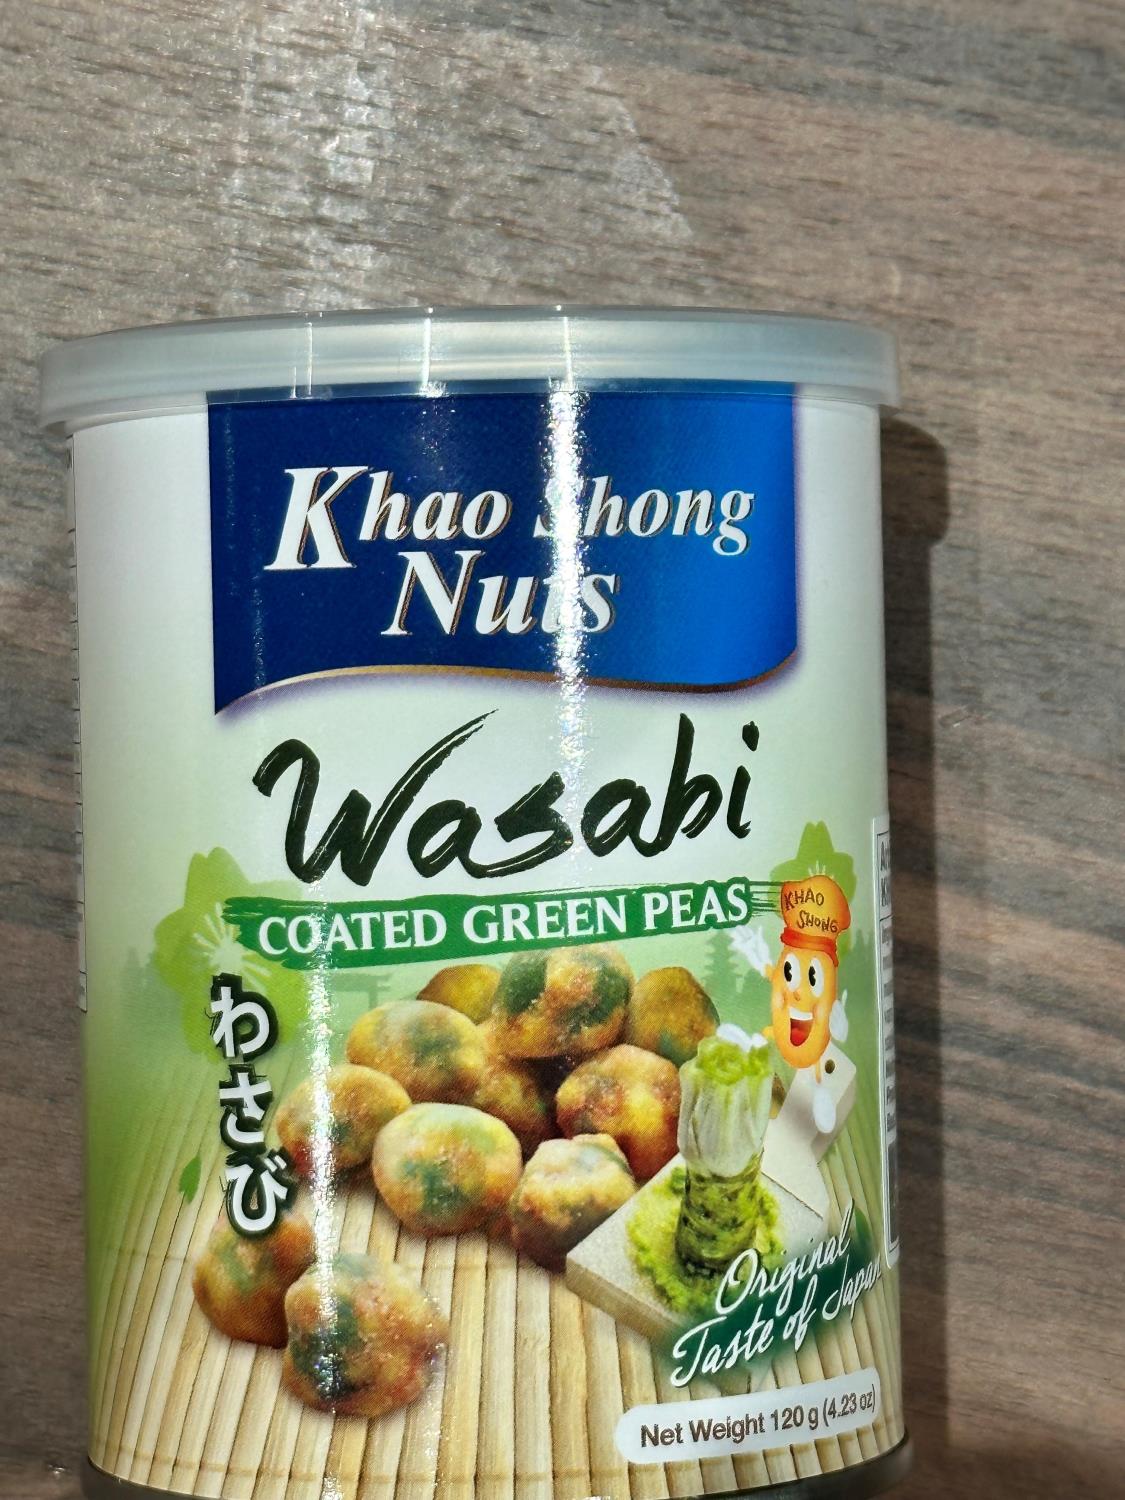 Khao shong Wasabi peas